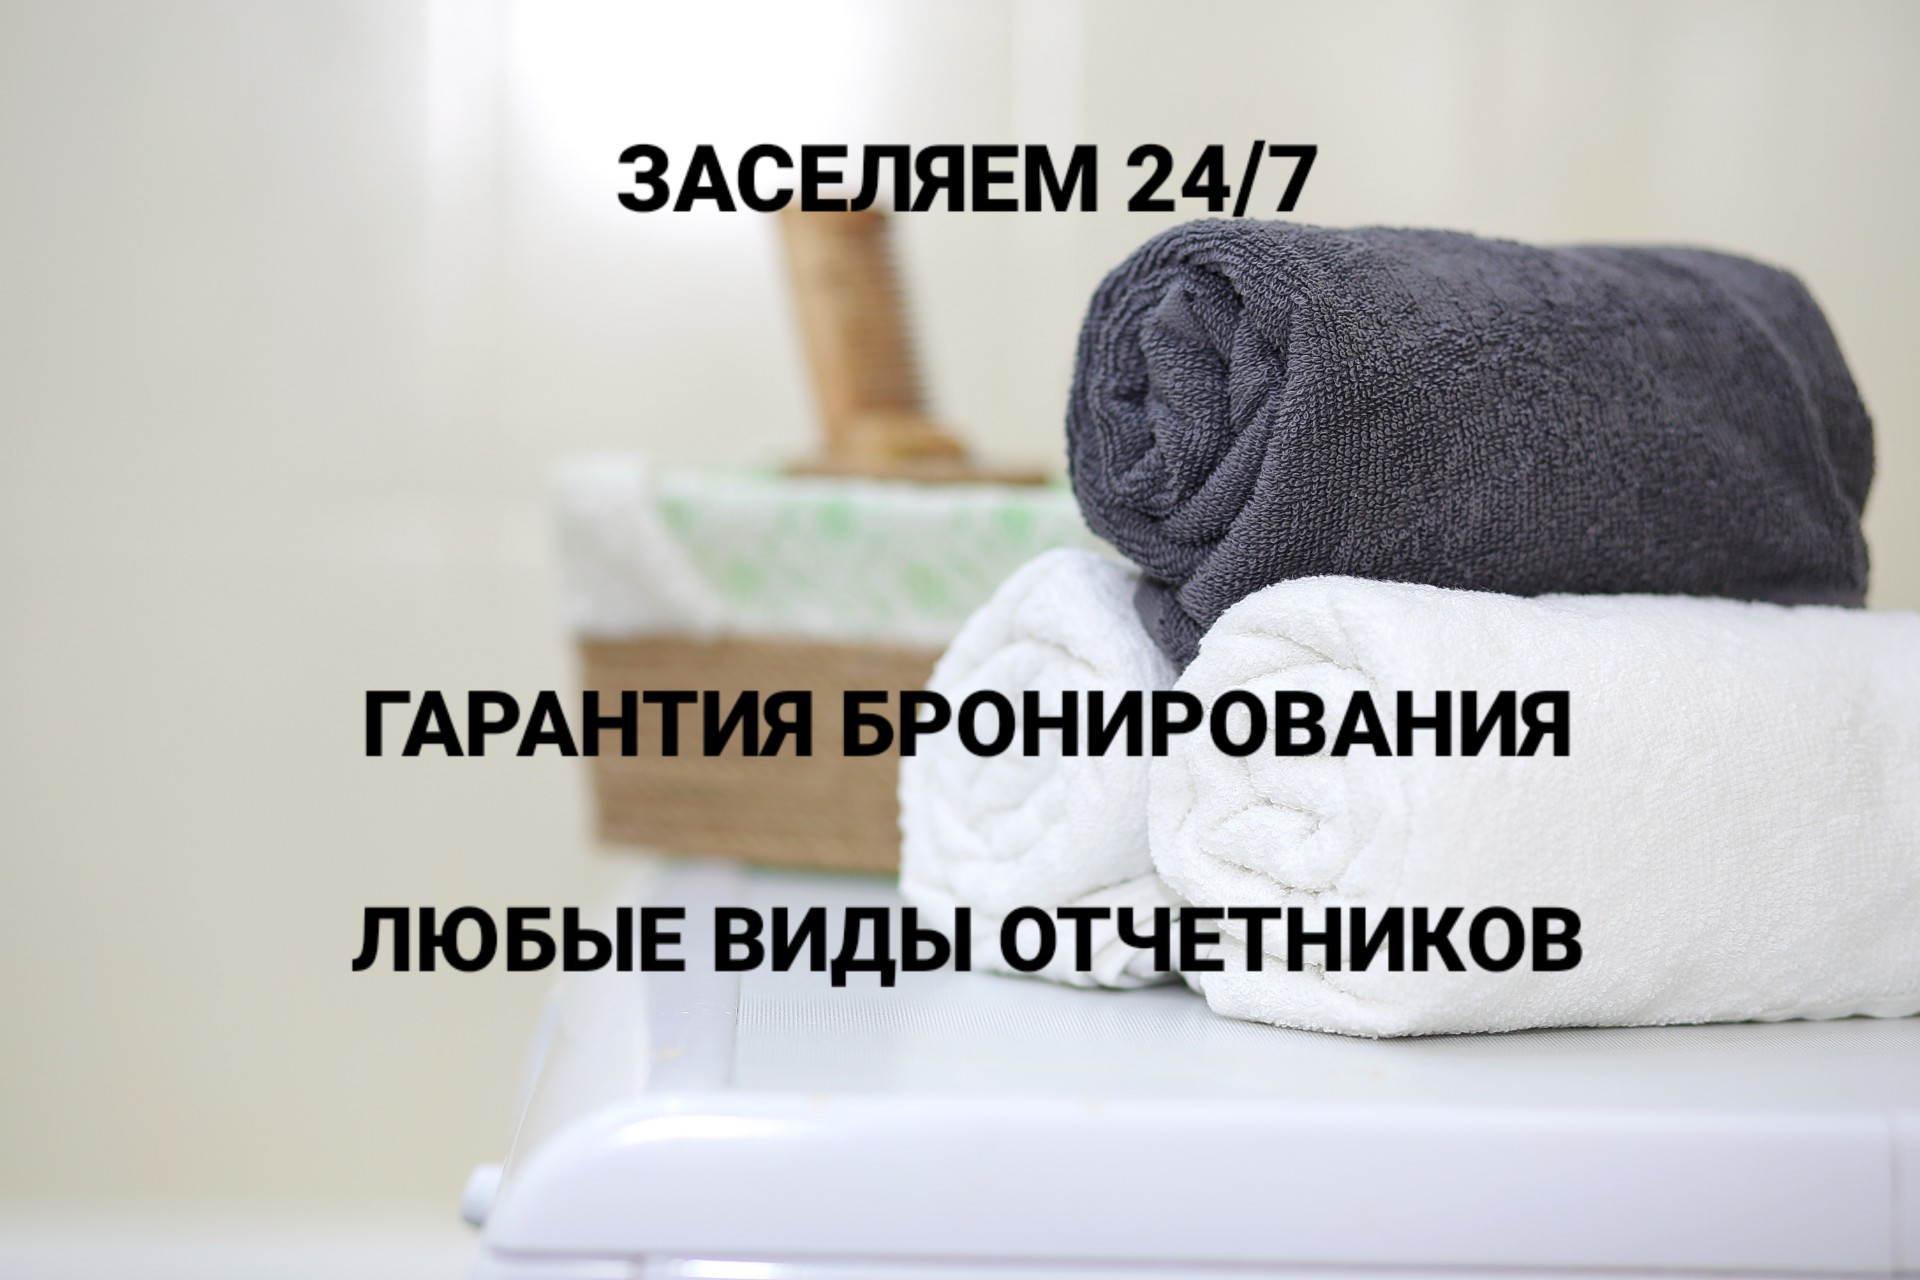 2-комнатная квартира,  Энтузиастов ул. 11